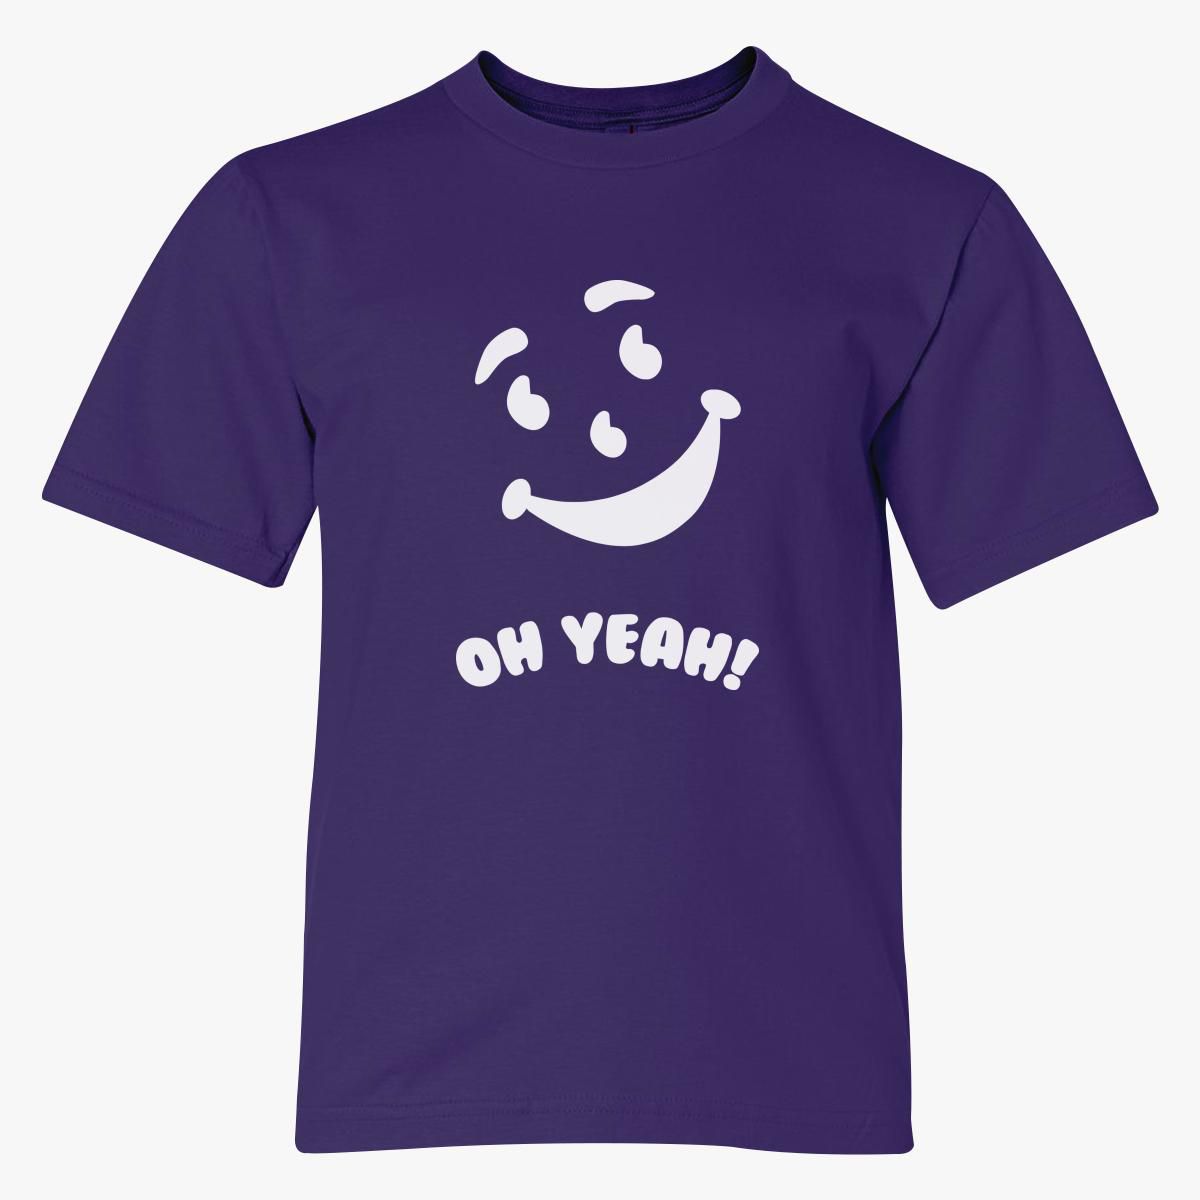 Kool-Aid Man Youth T-shirt - Customon
 Kool Aid Shirt